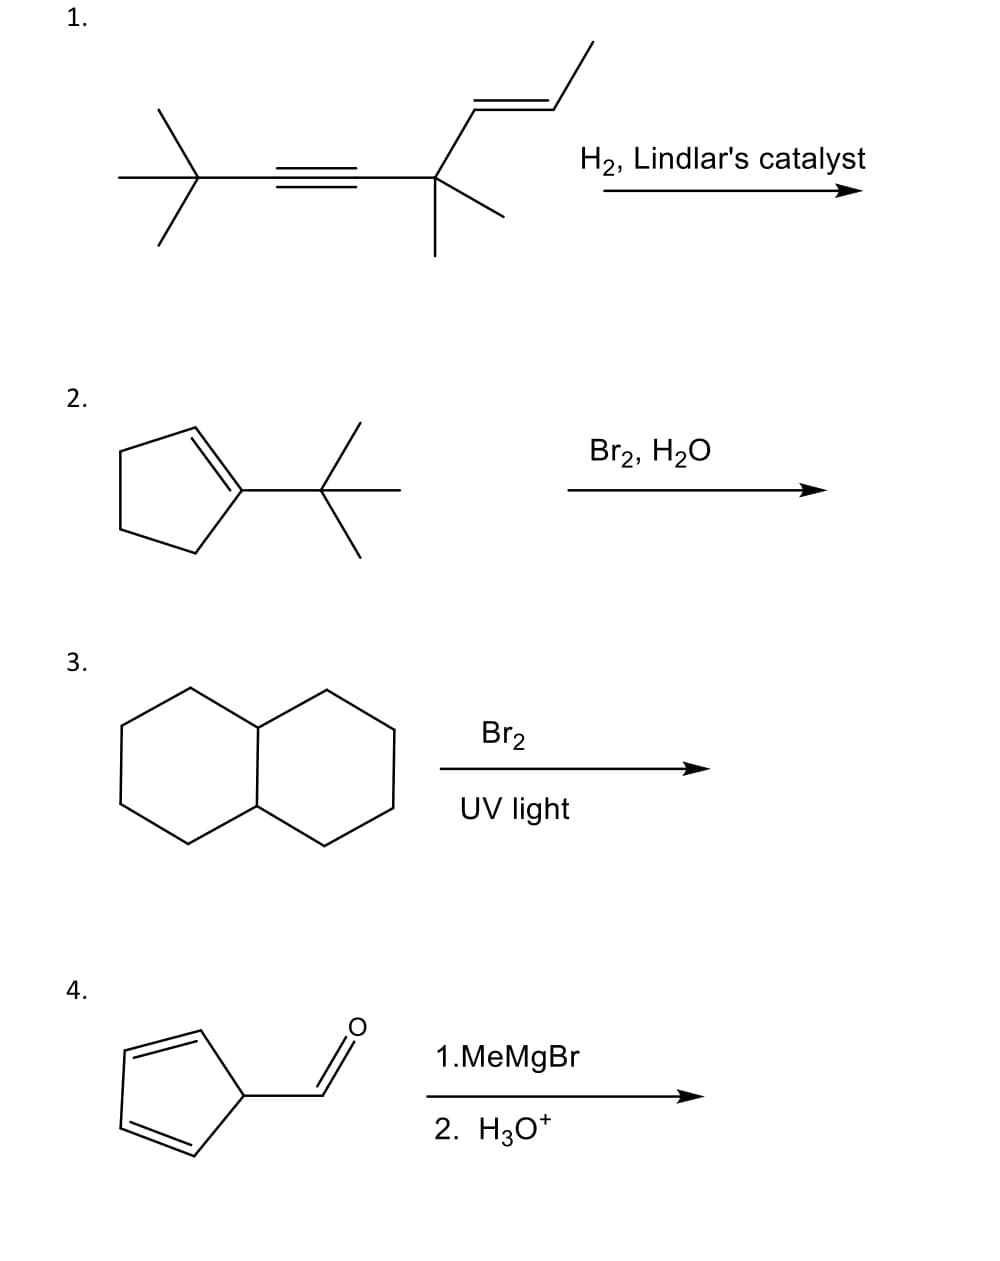 1.
2.
3.
4.
Br₂
UV light
H₂, Lindlar's catalyst
1.MeMgBr
2. H3O+
Br2, H₂O